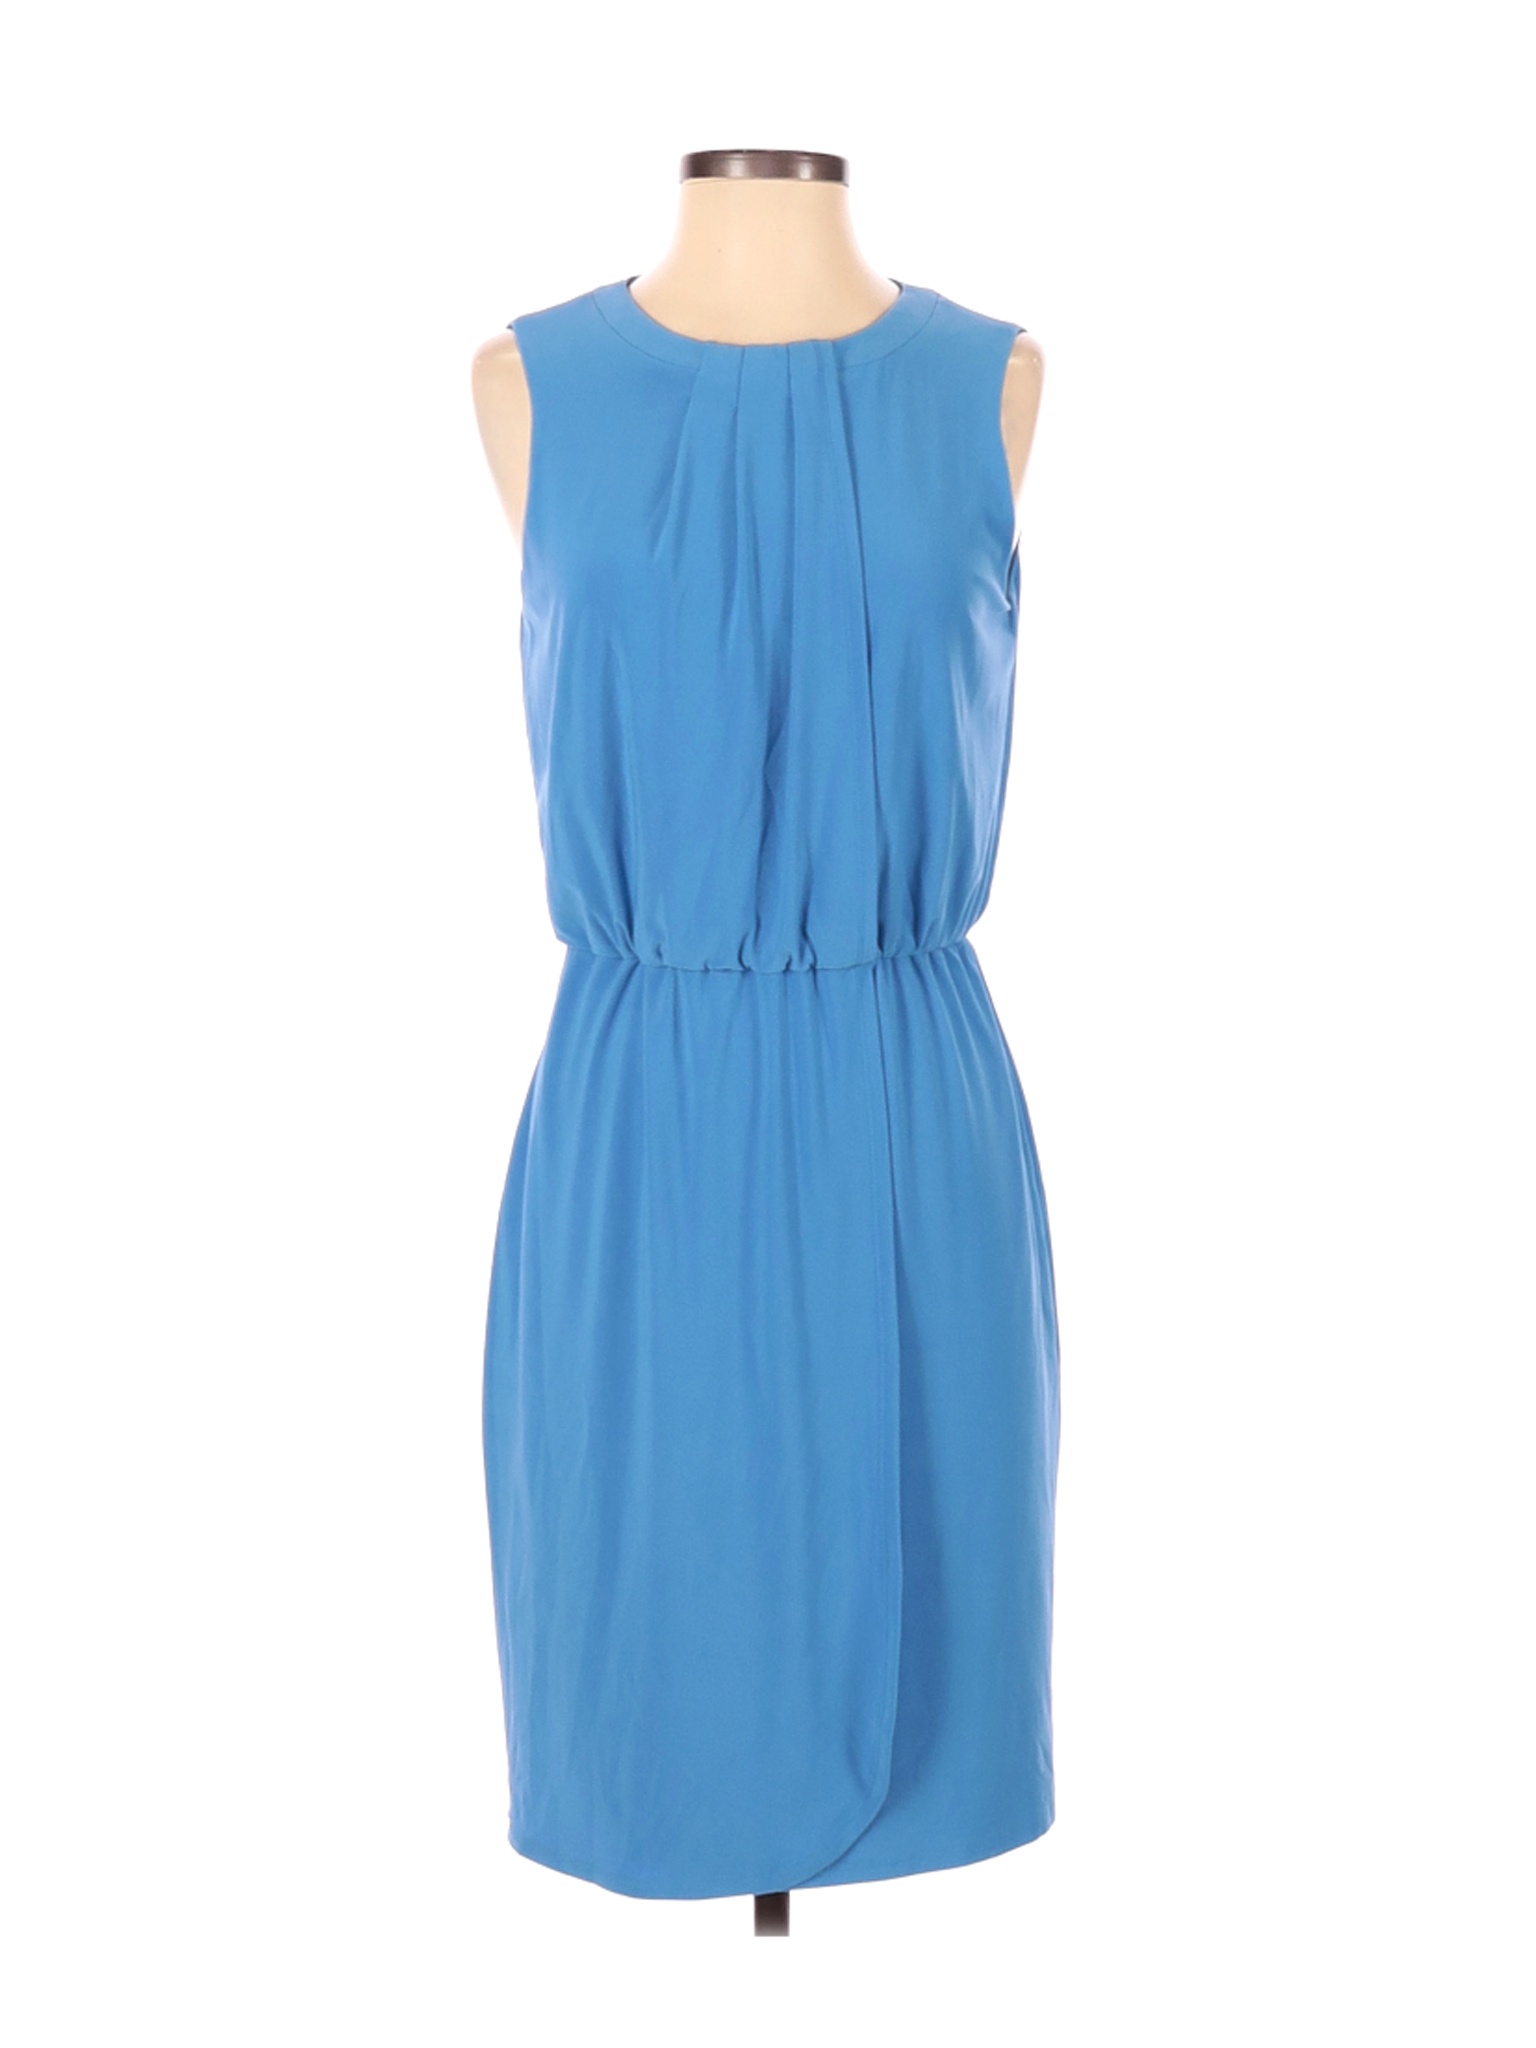 White House Black Market Women Blue Casual Dress XS | eBay